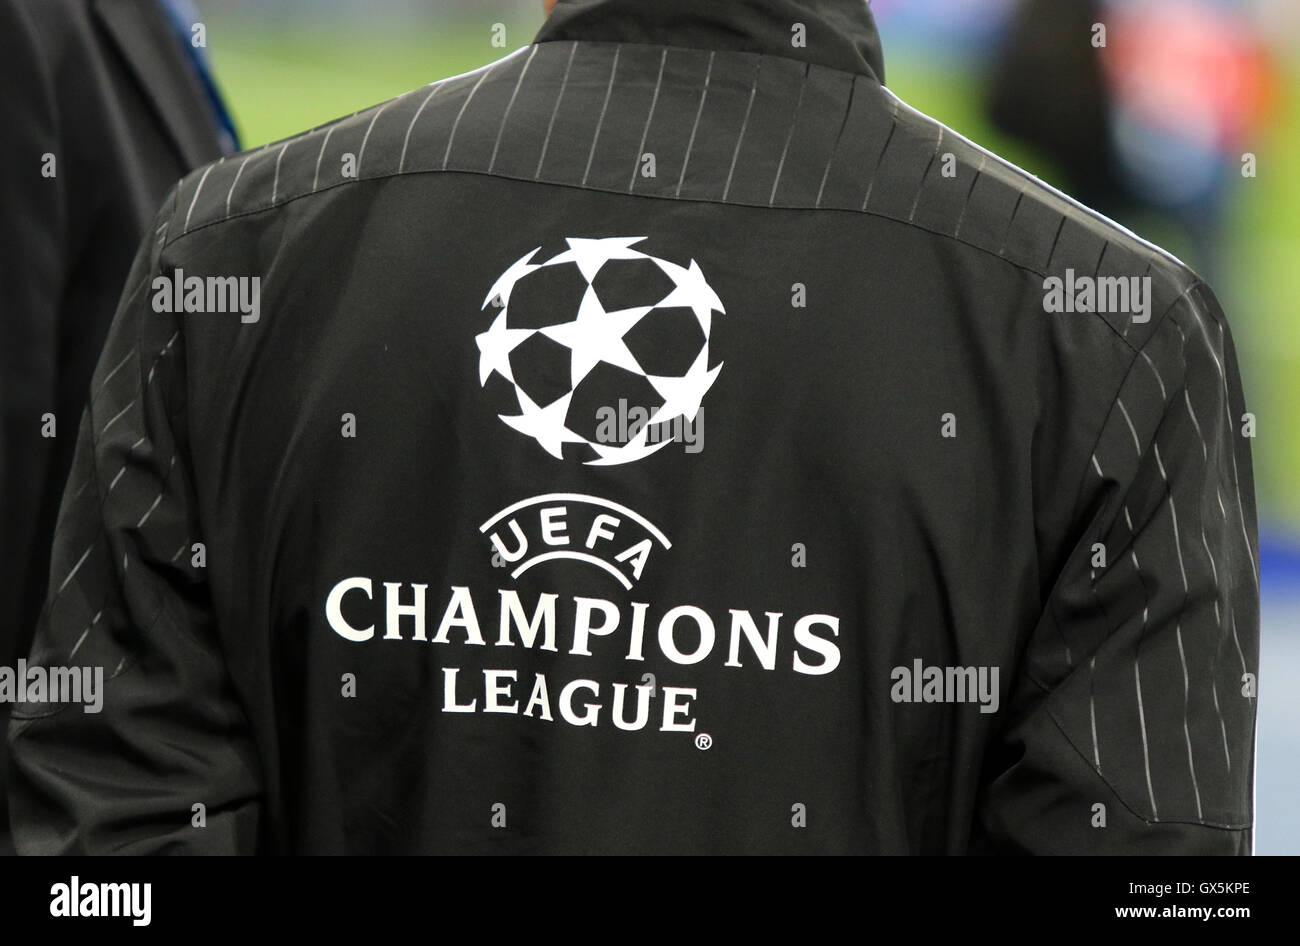 uefa champions league jacket